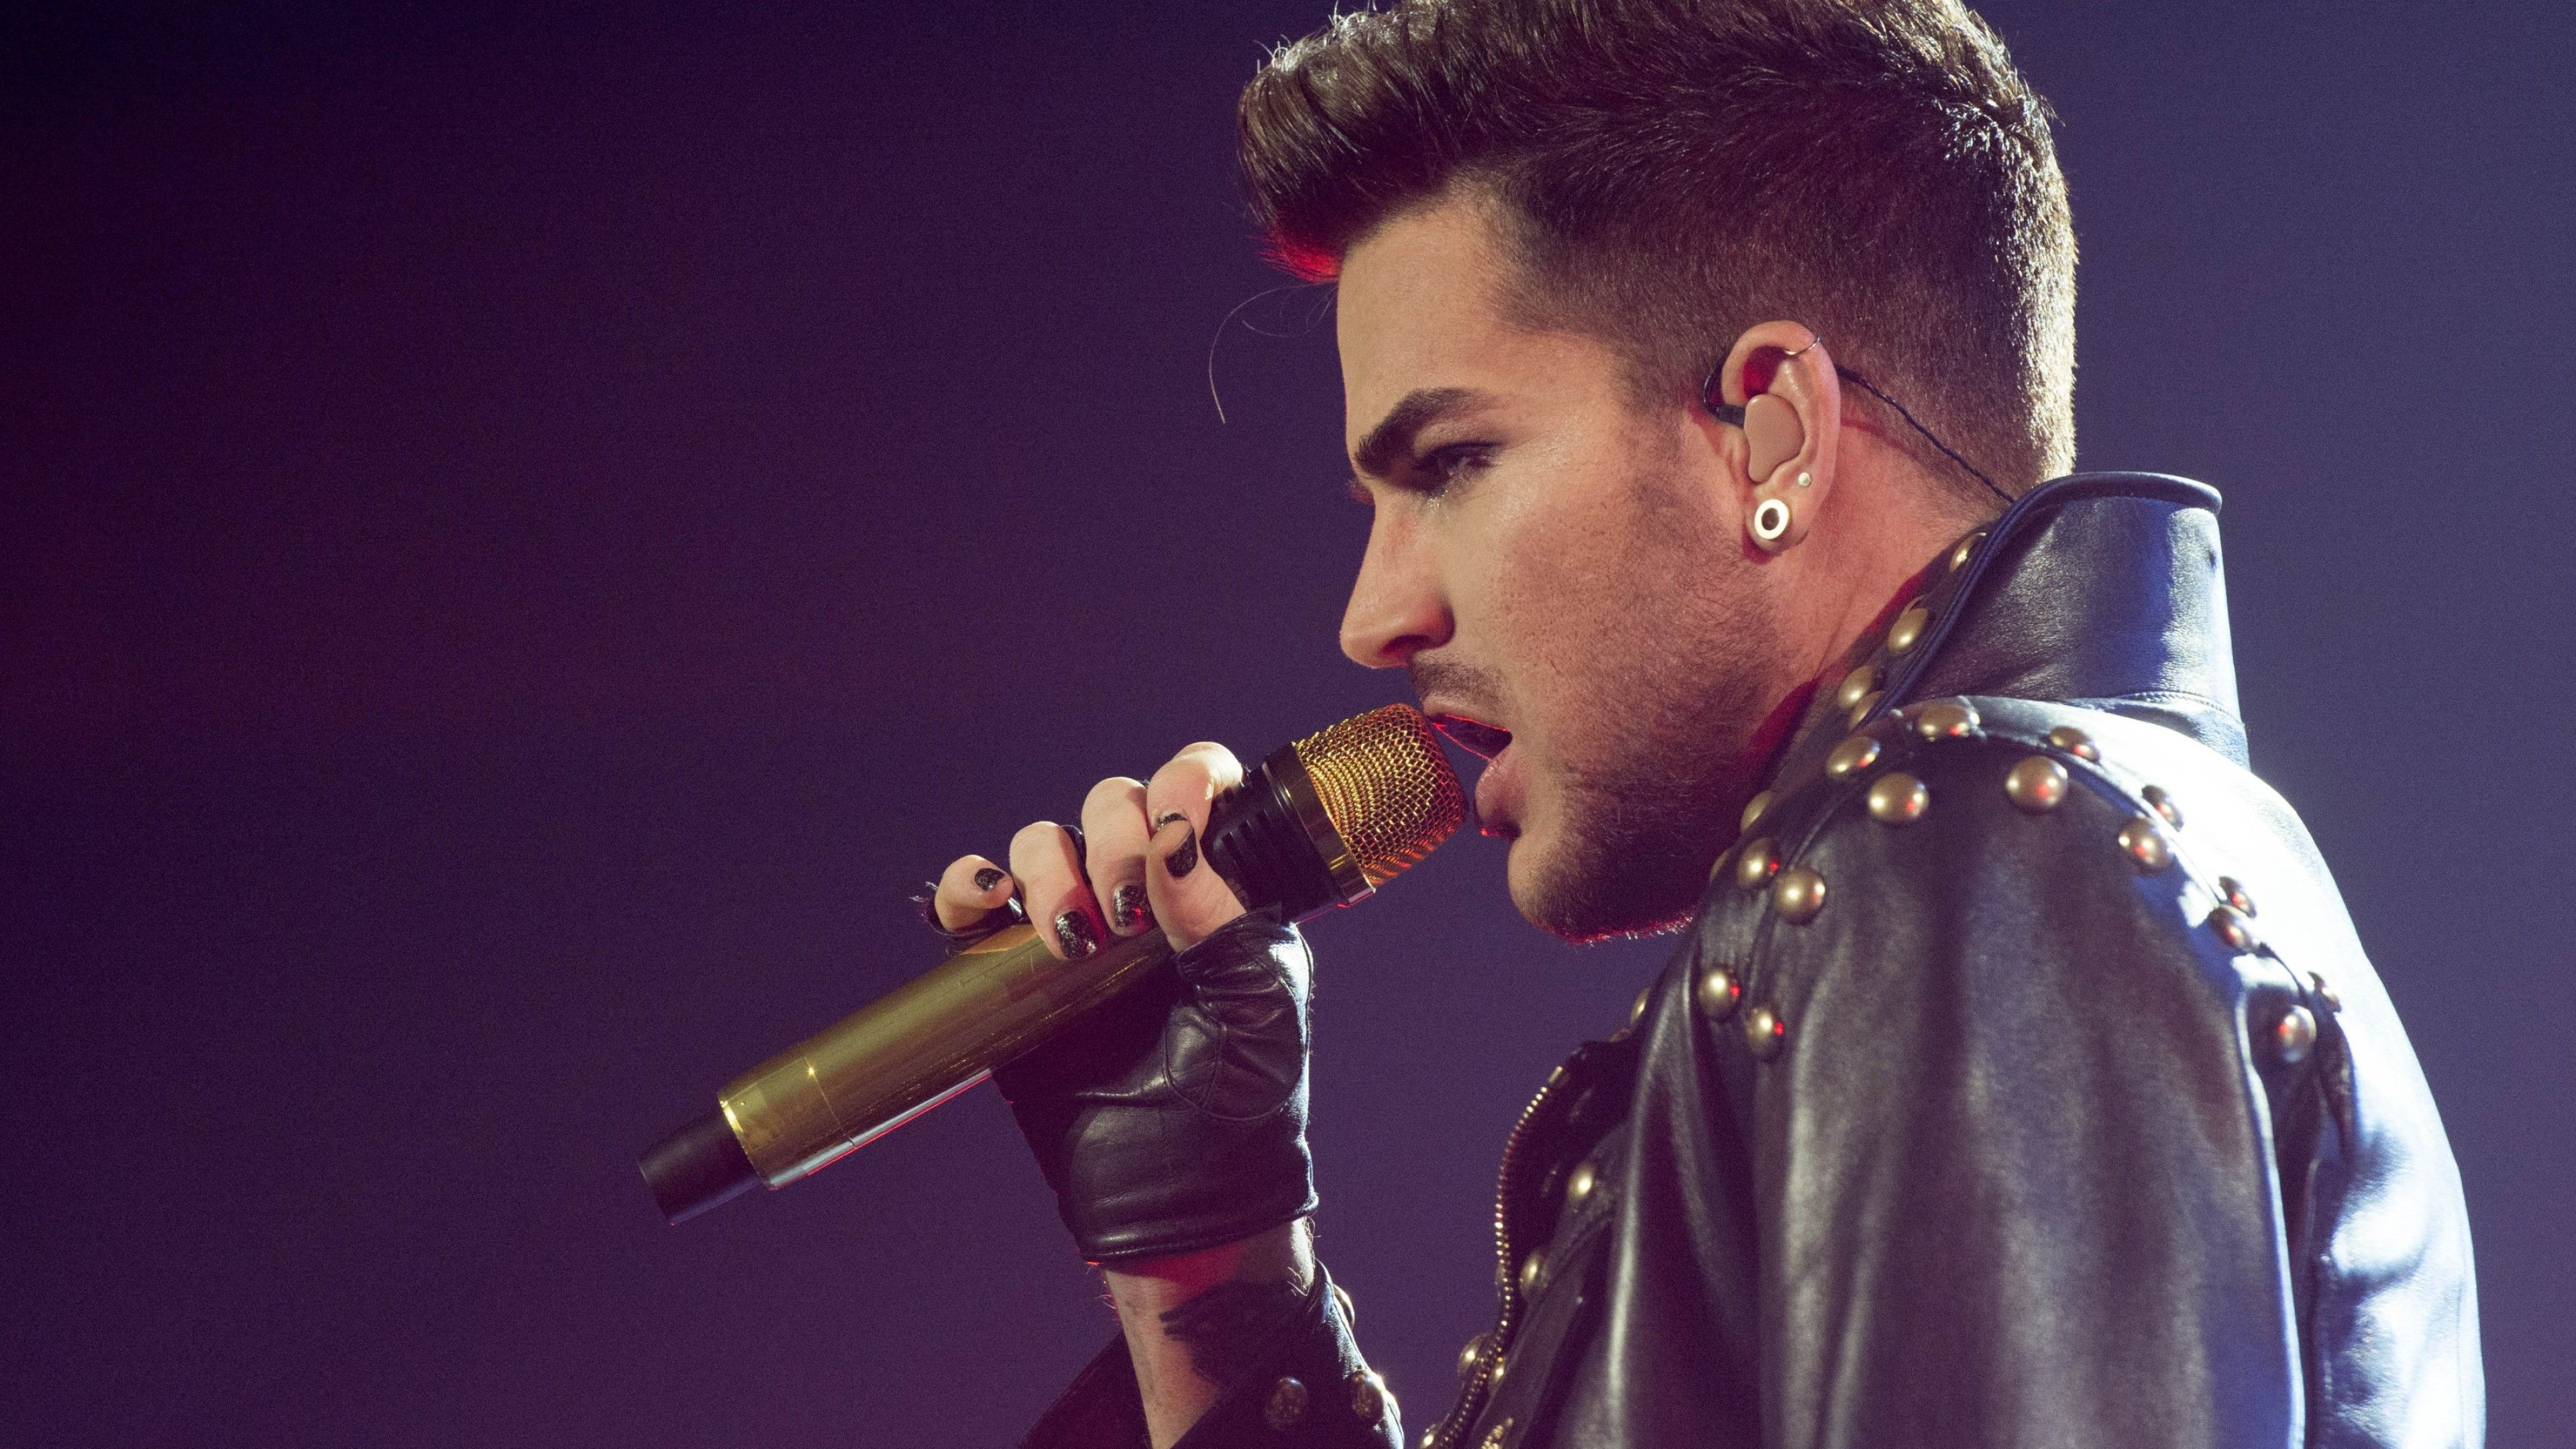 Adam Lambert: The 2015 Attitude Awards - The Music Award, Music artist. 3840x2160 4K Wallpaper.